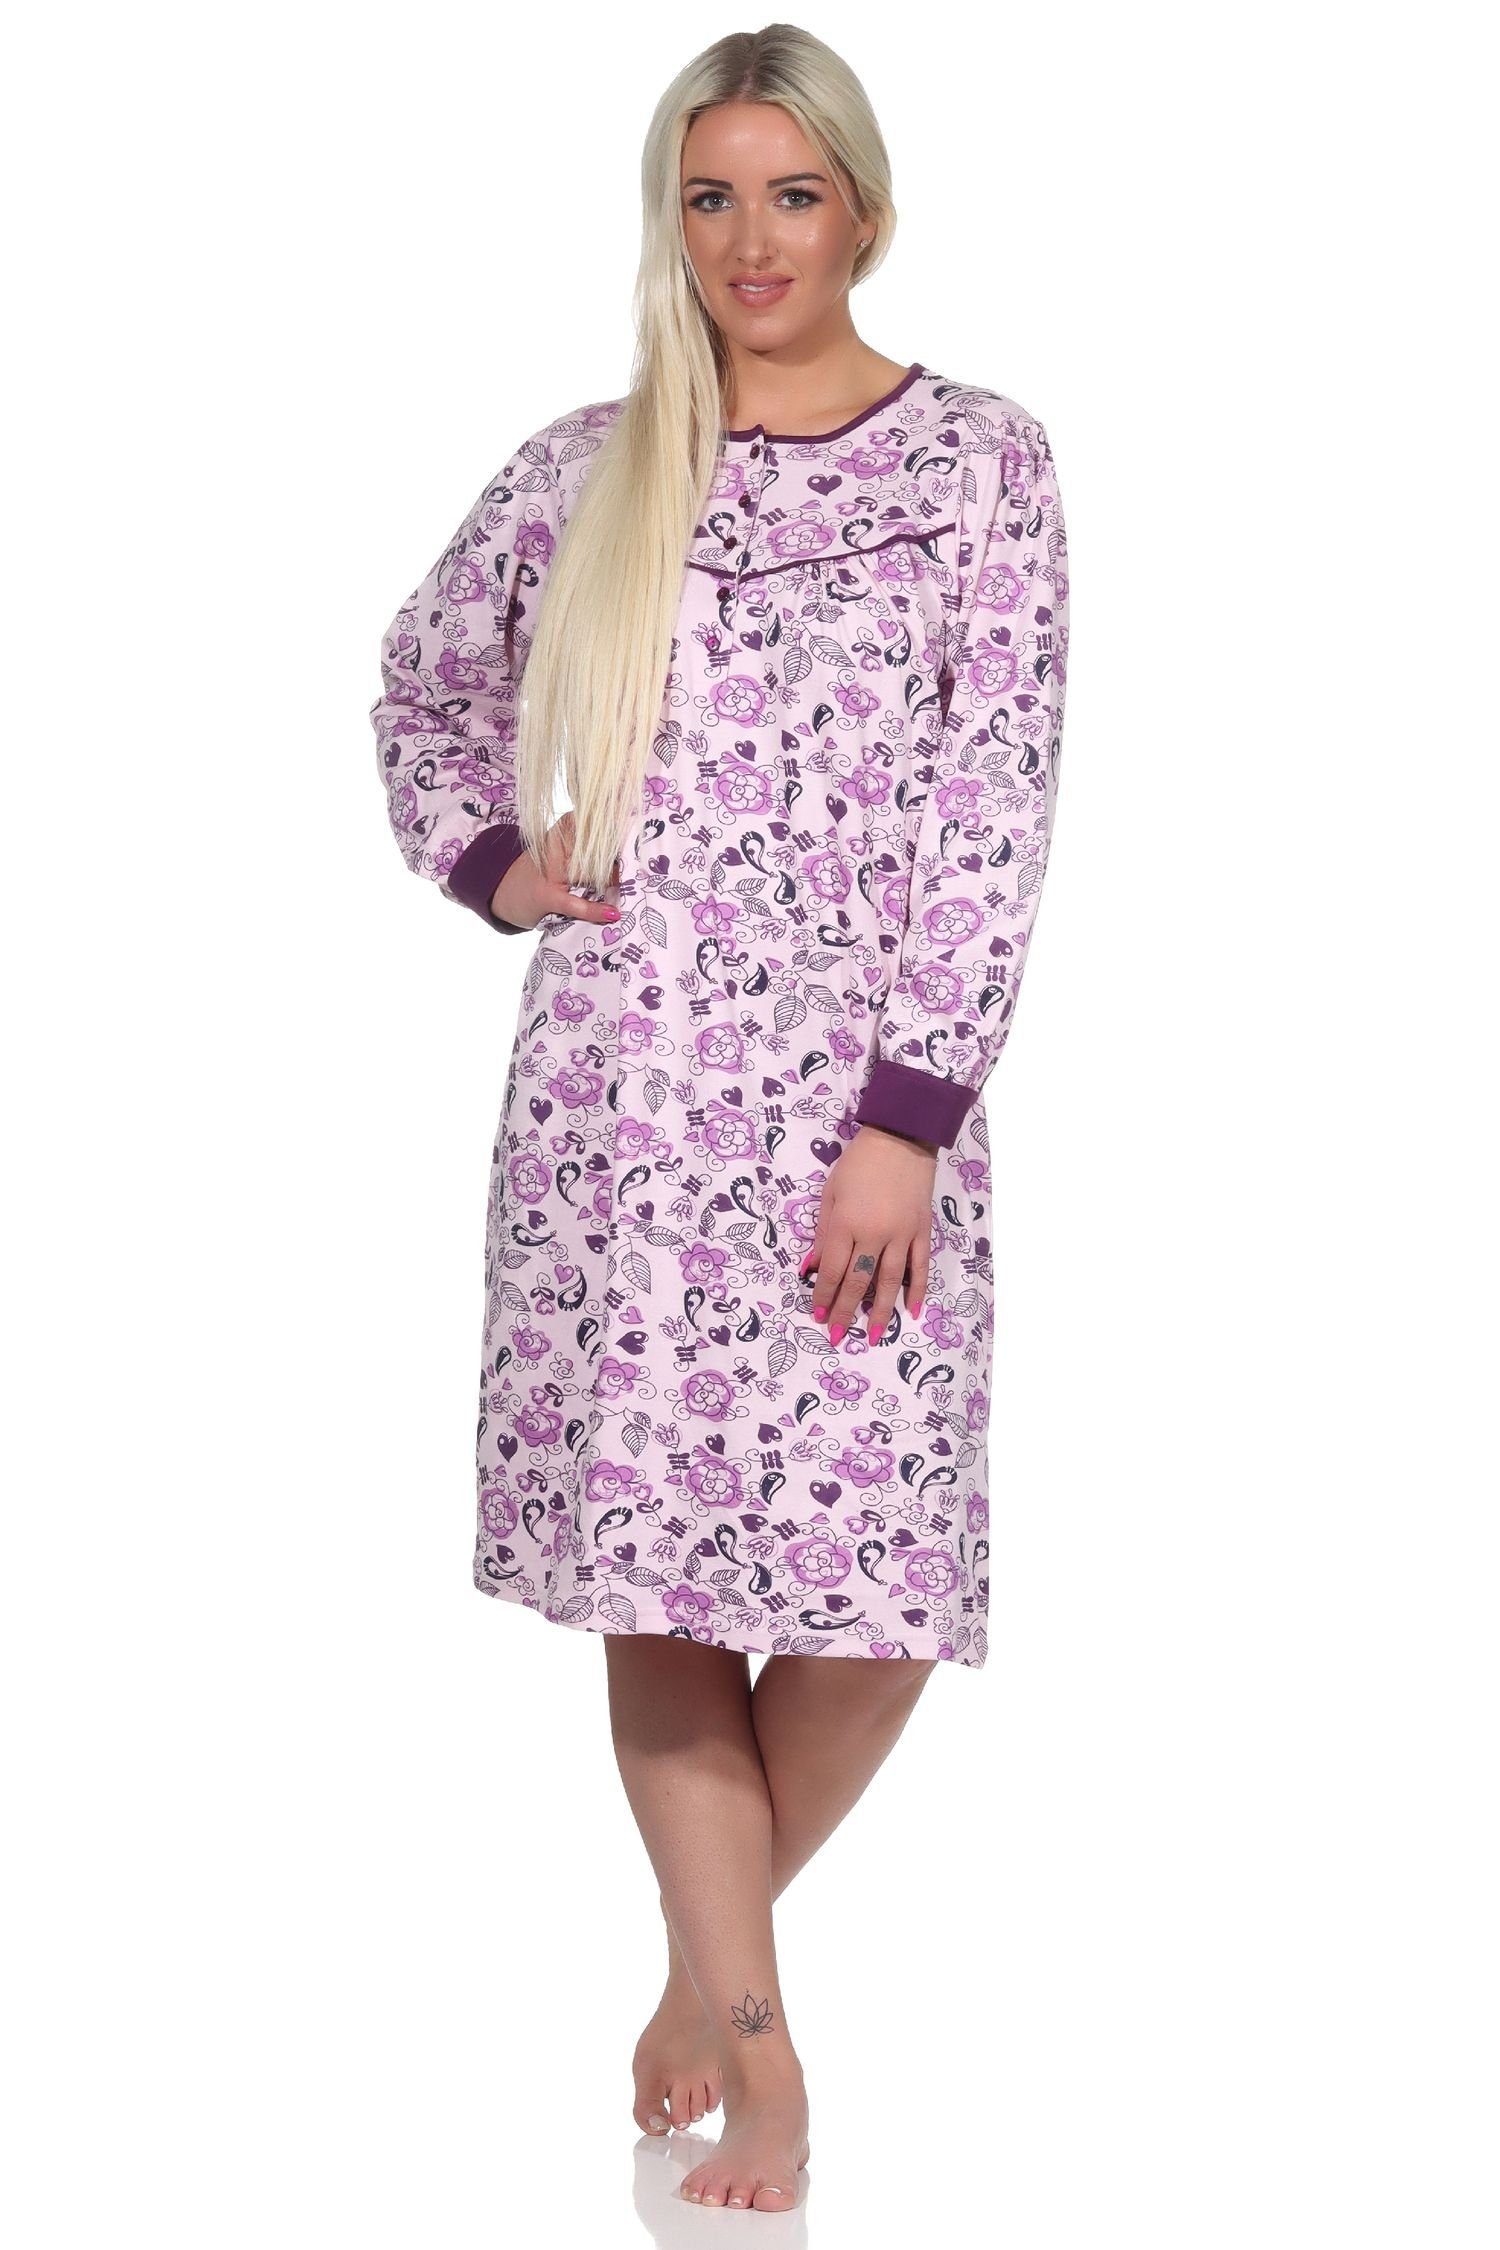 Normann Nachthemd Edles Damen Nachthemd Interlock-Qualität langarm Kuschel in rosa